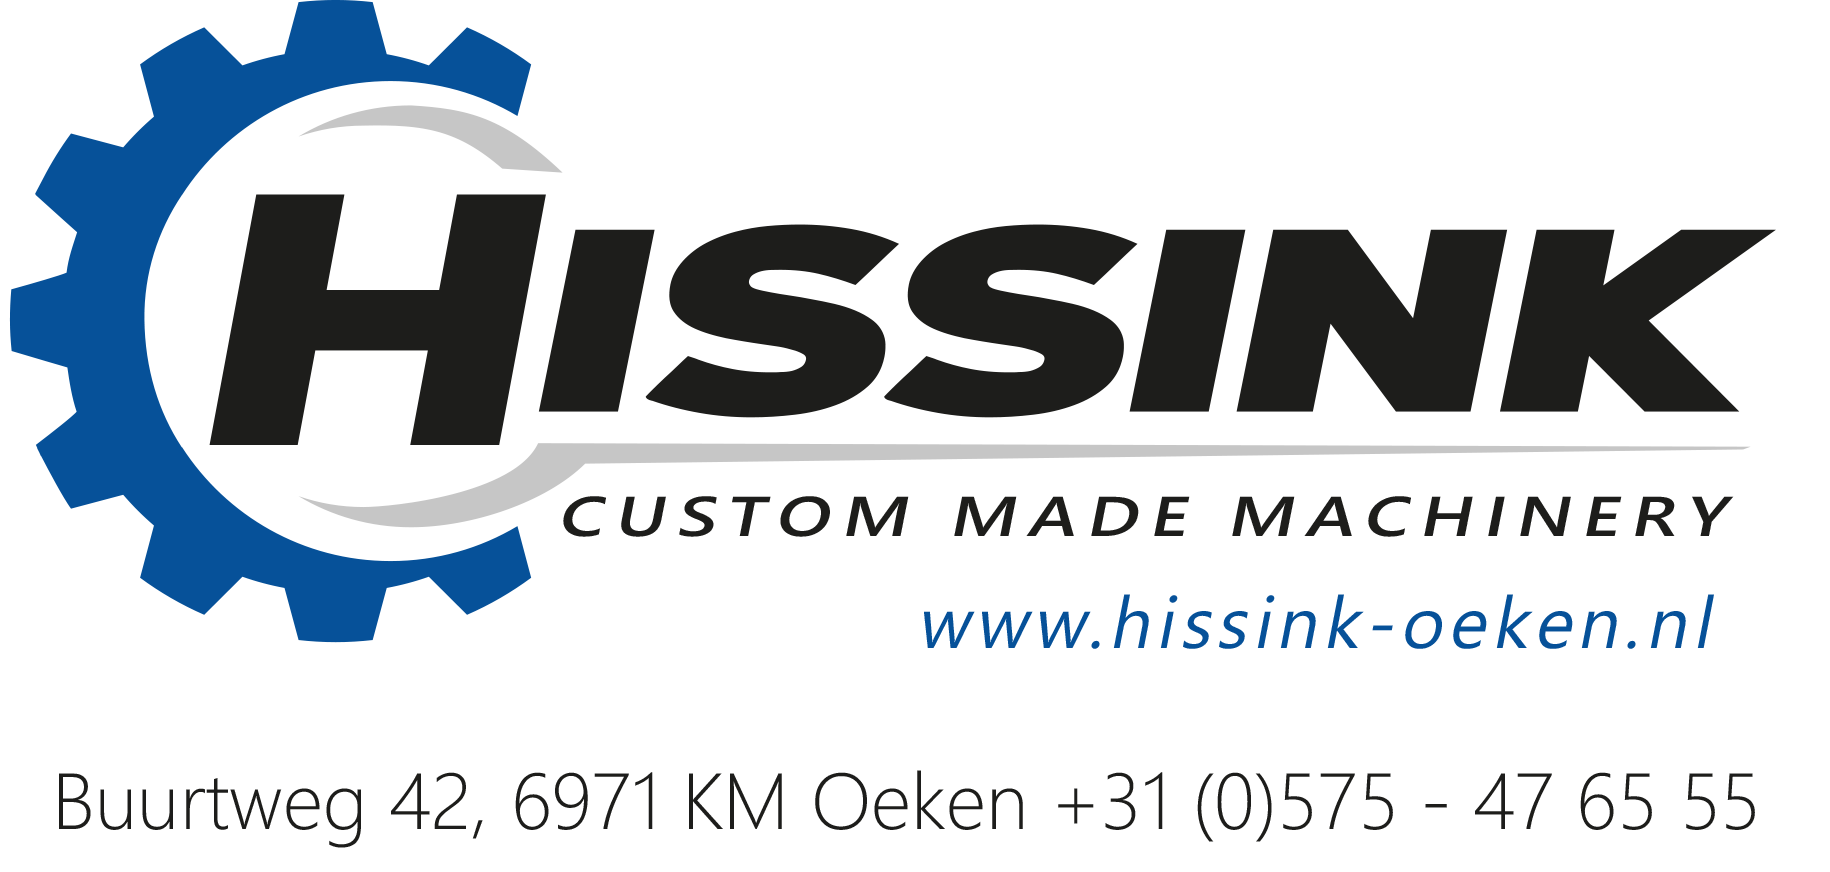 Hissink_Logo_Adres.png